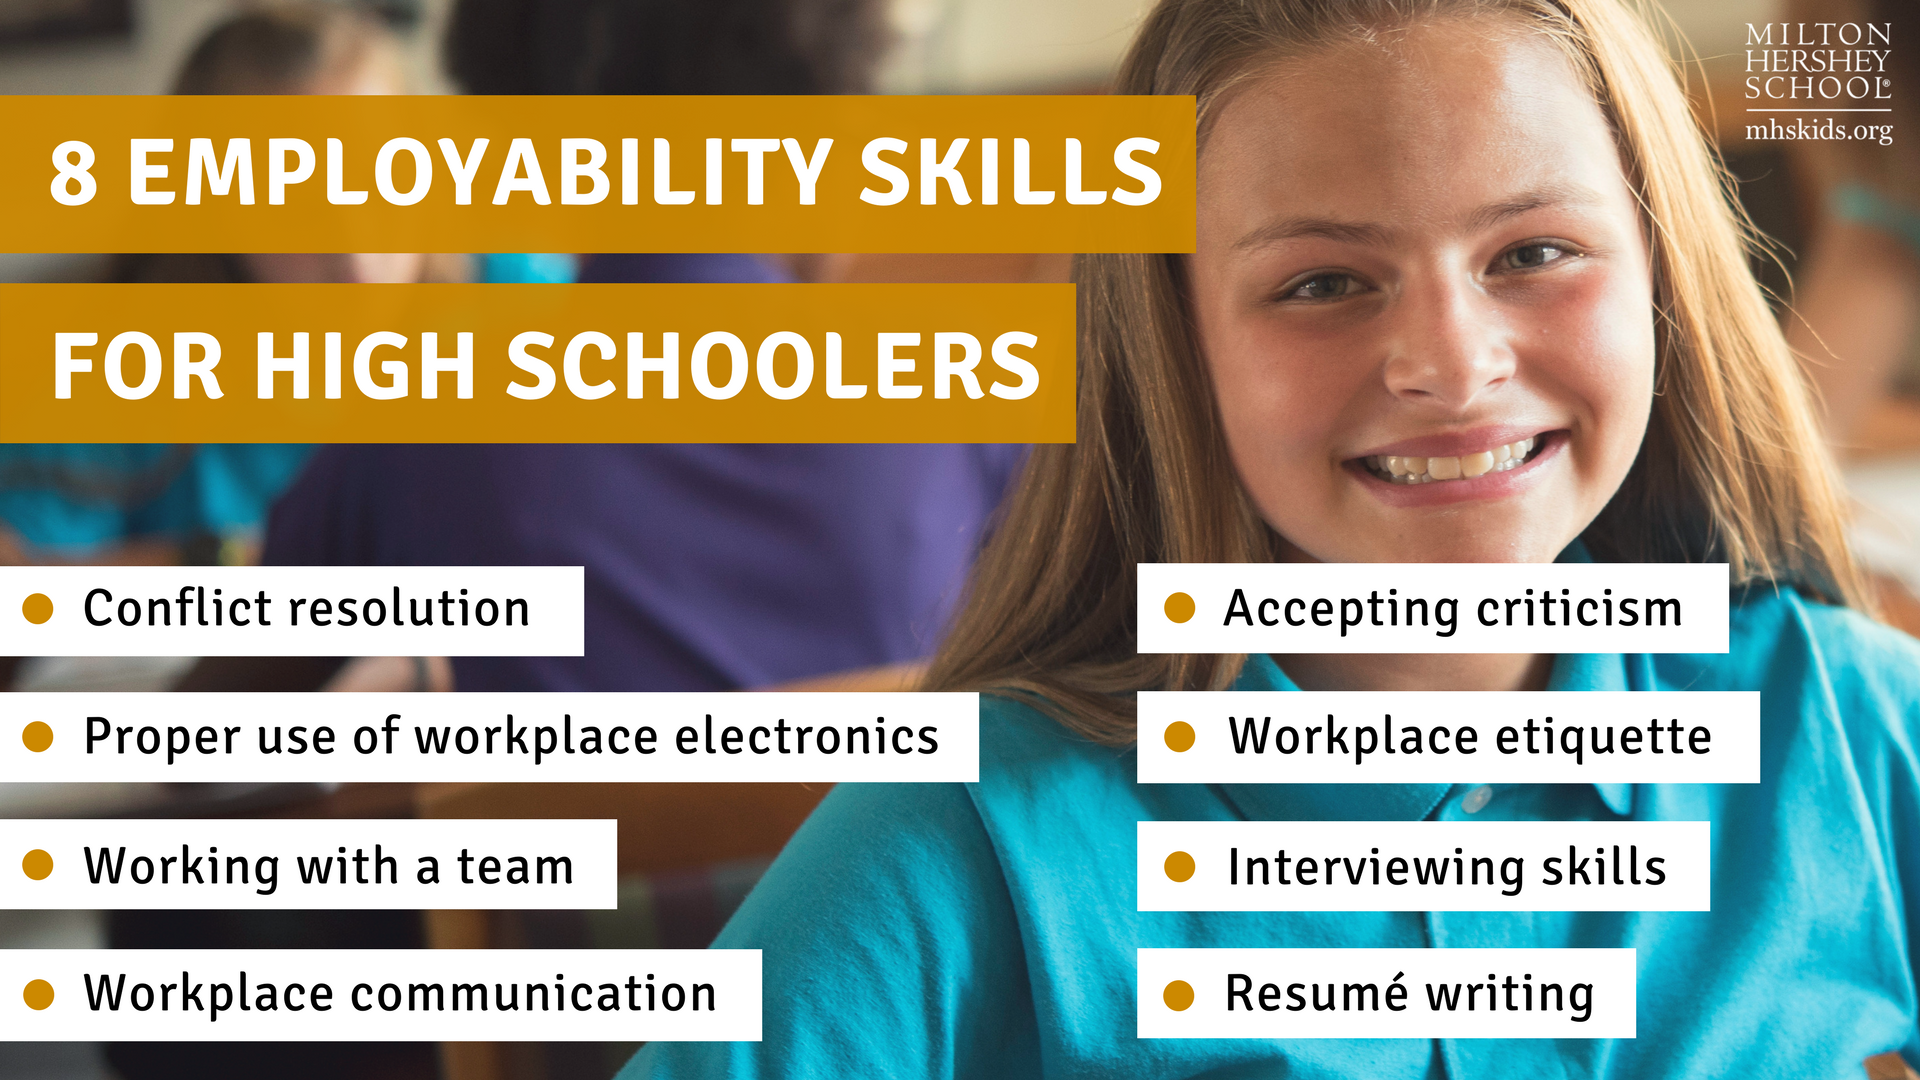 MHS teaches employability skills to high schoolers